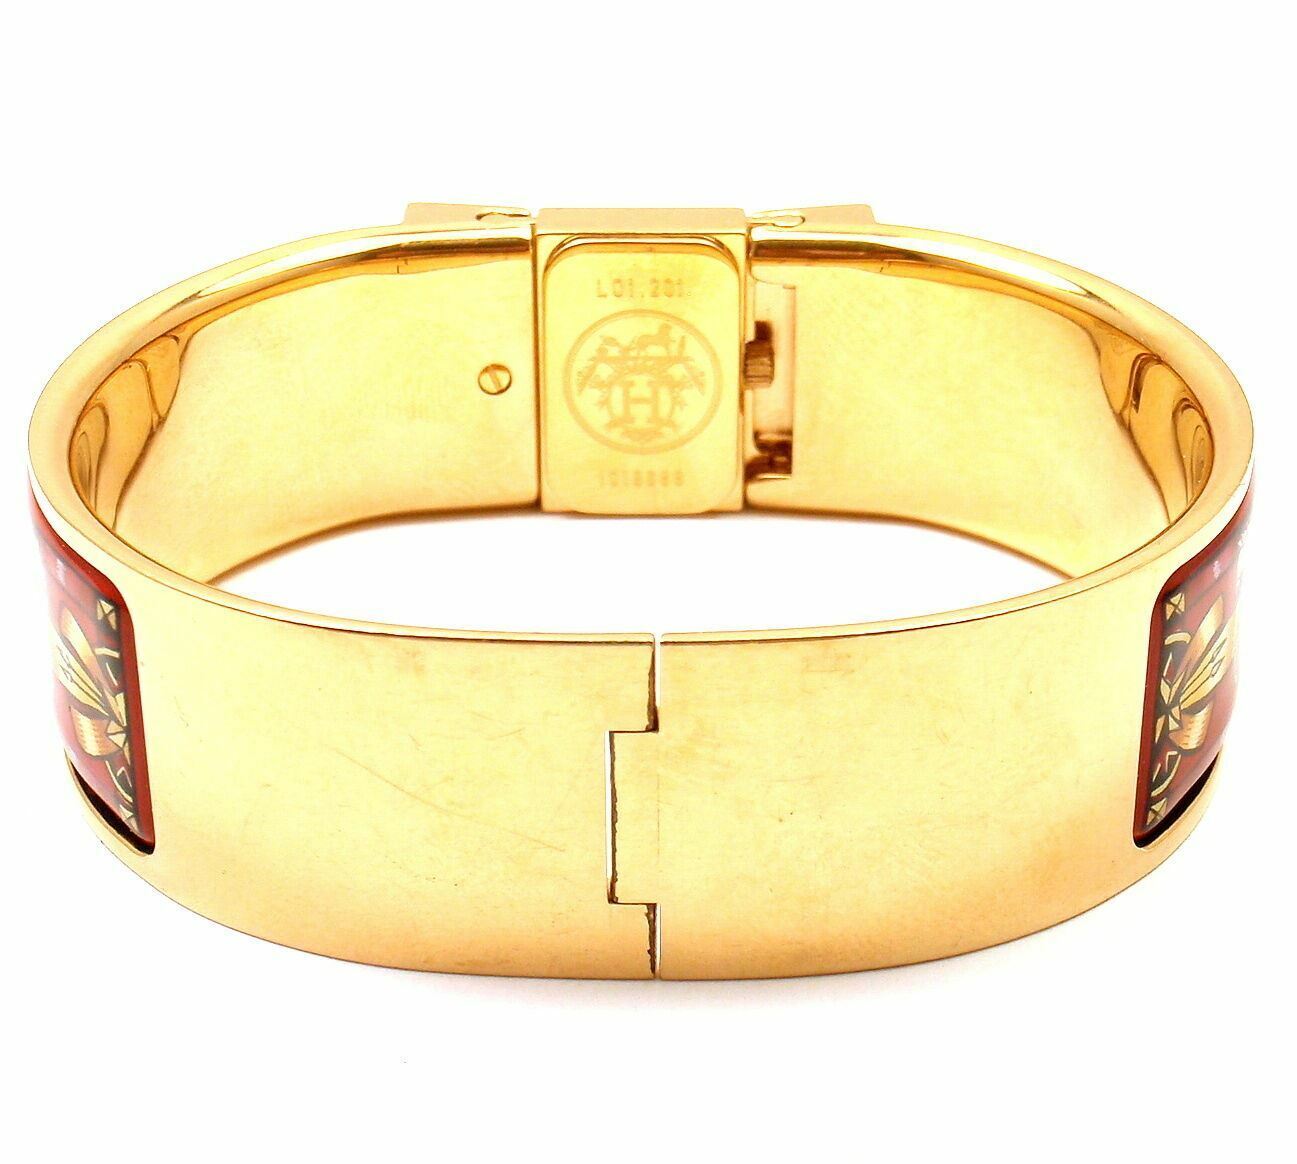 Authentic HERMES Loquet Goldtone x Red Lizard Skin Bangle Bracelet Wrist  Watch